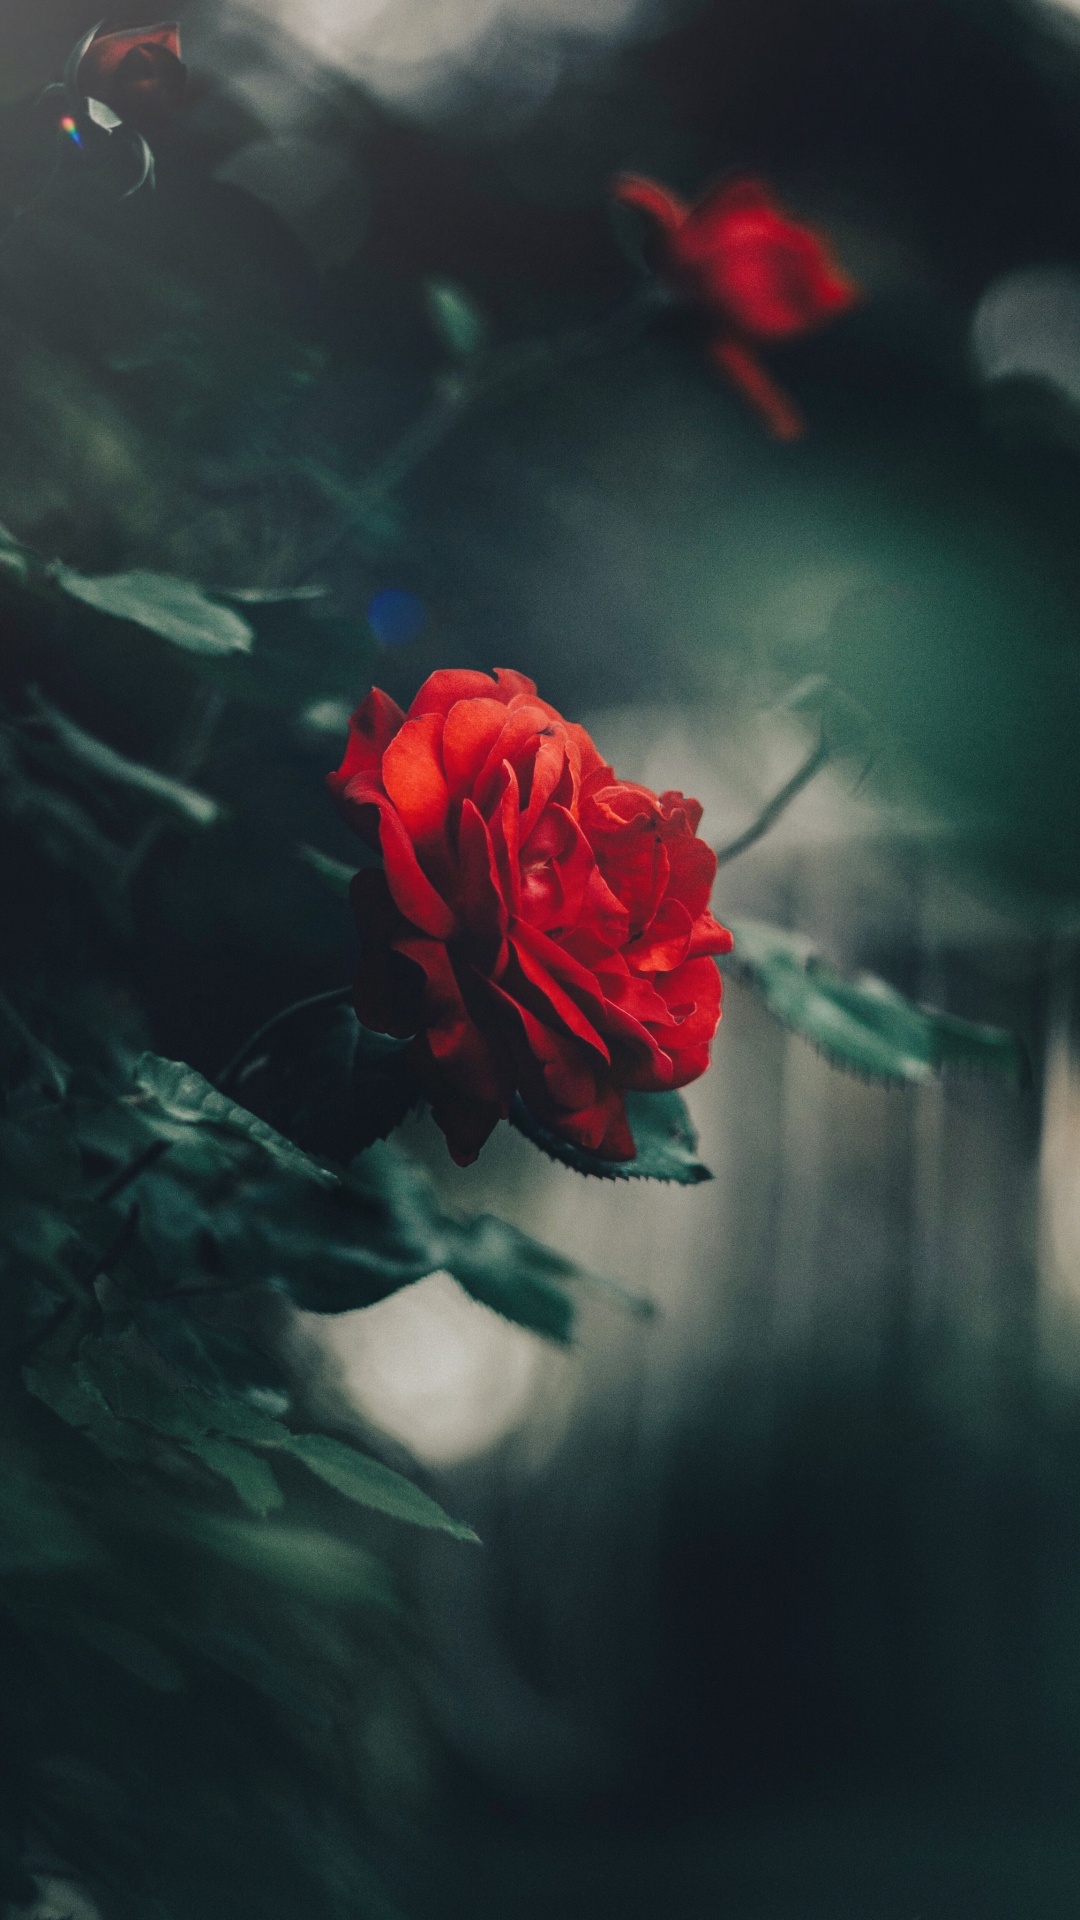 Rose Rouge en Fleurs Pendant la Journée. Wallpaper in 1080x1920 Resolution